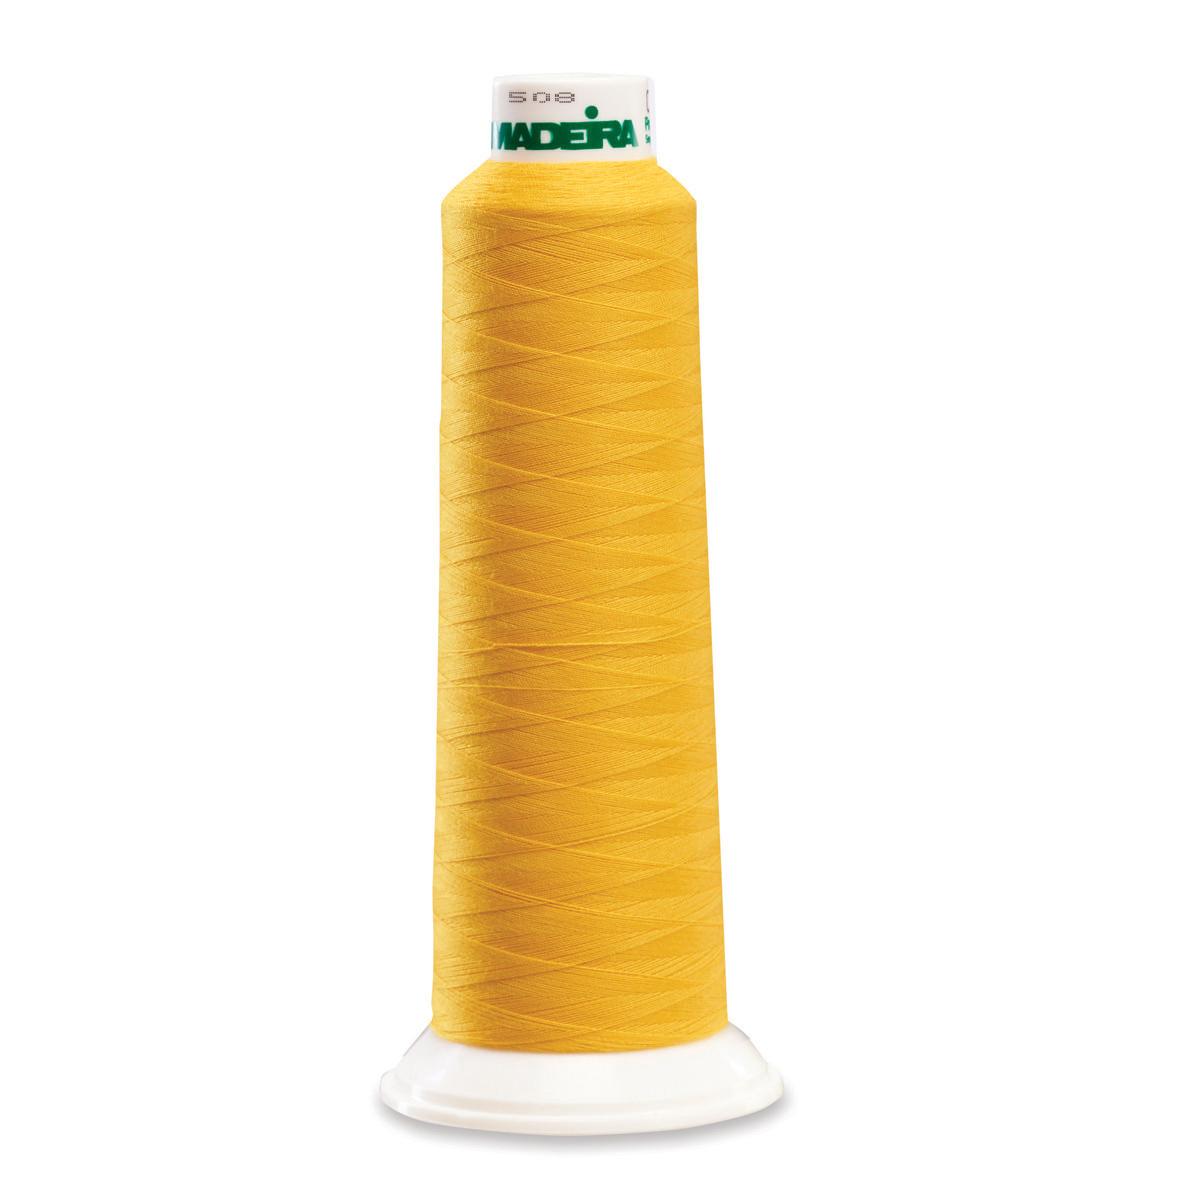 Madeira Serger Thread - Mustard